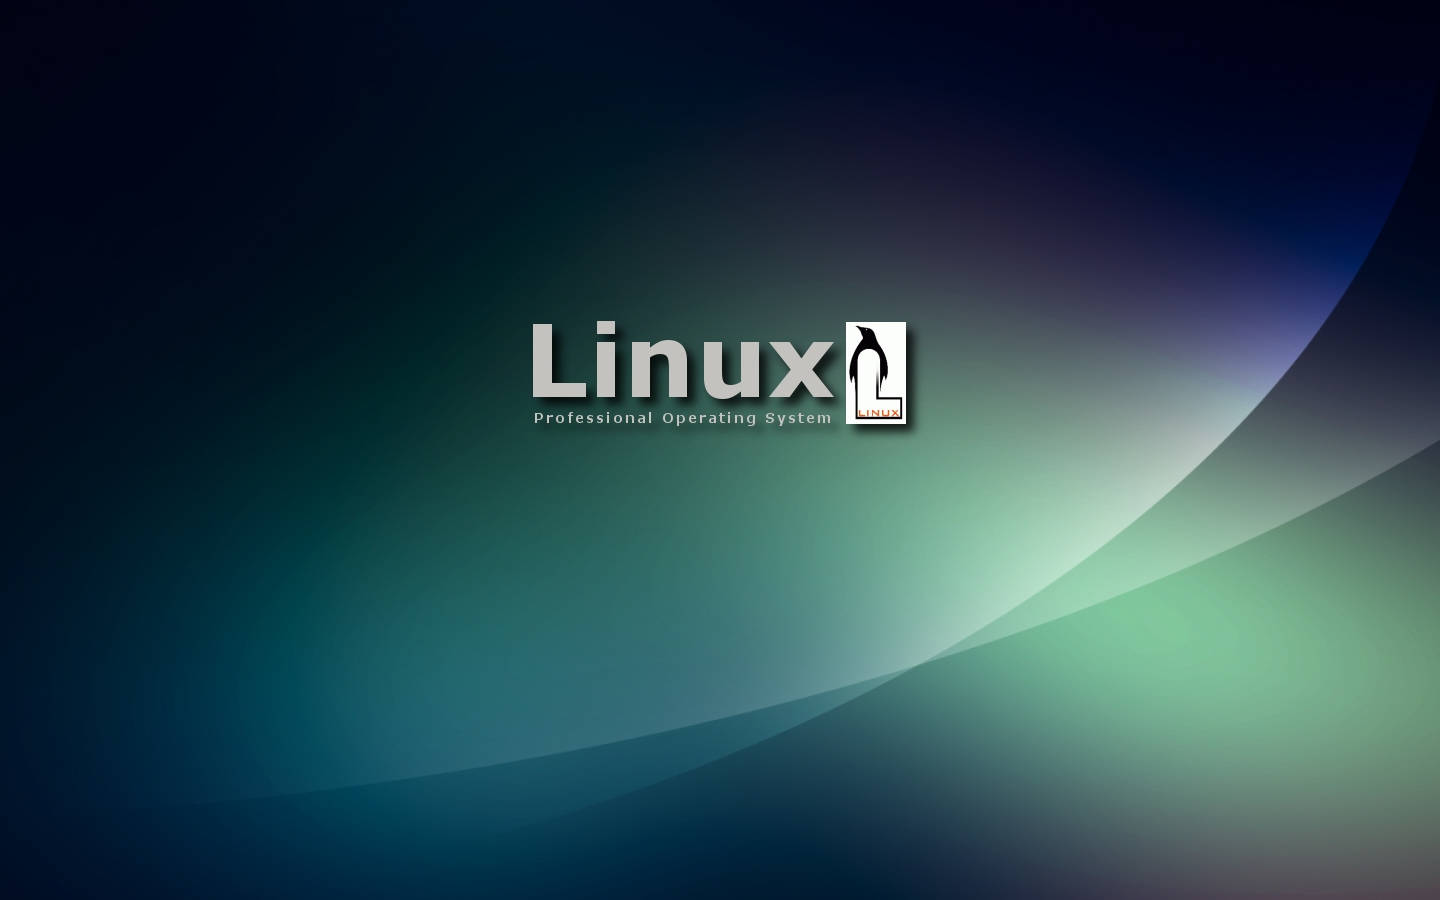 Cool Gradient Linux logo Wallpaper